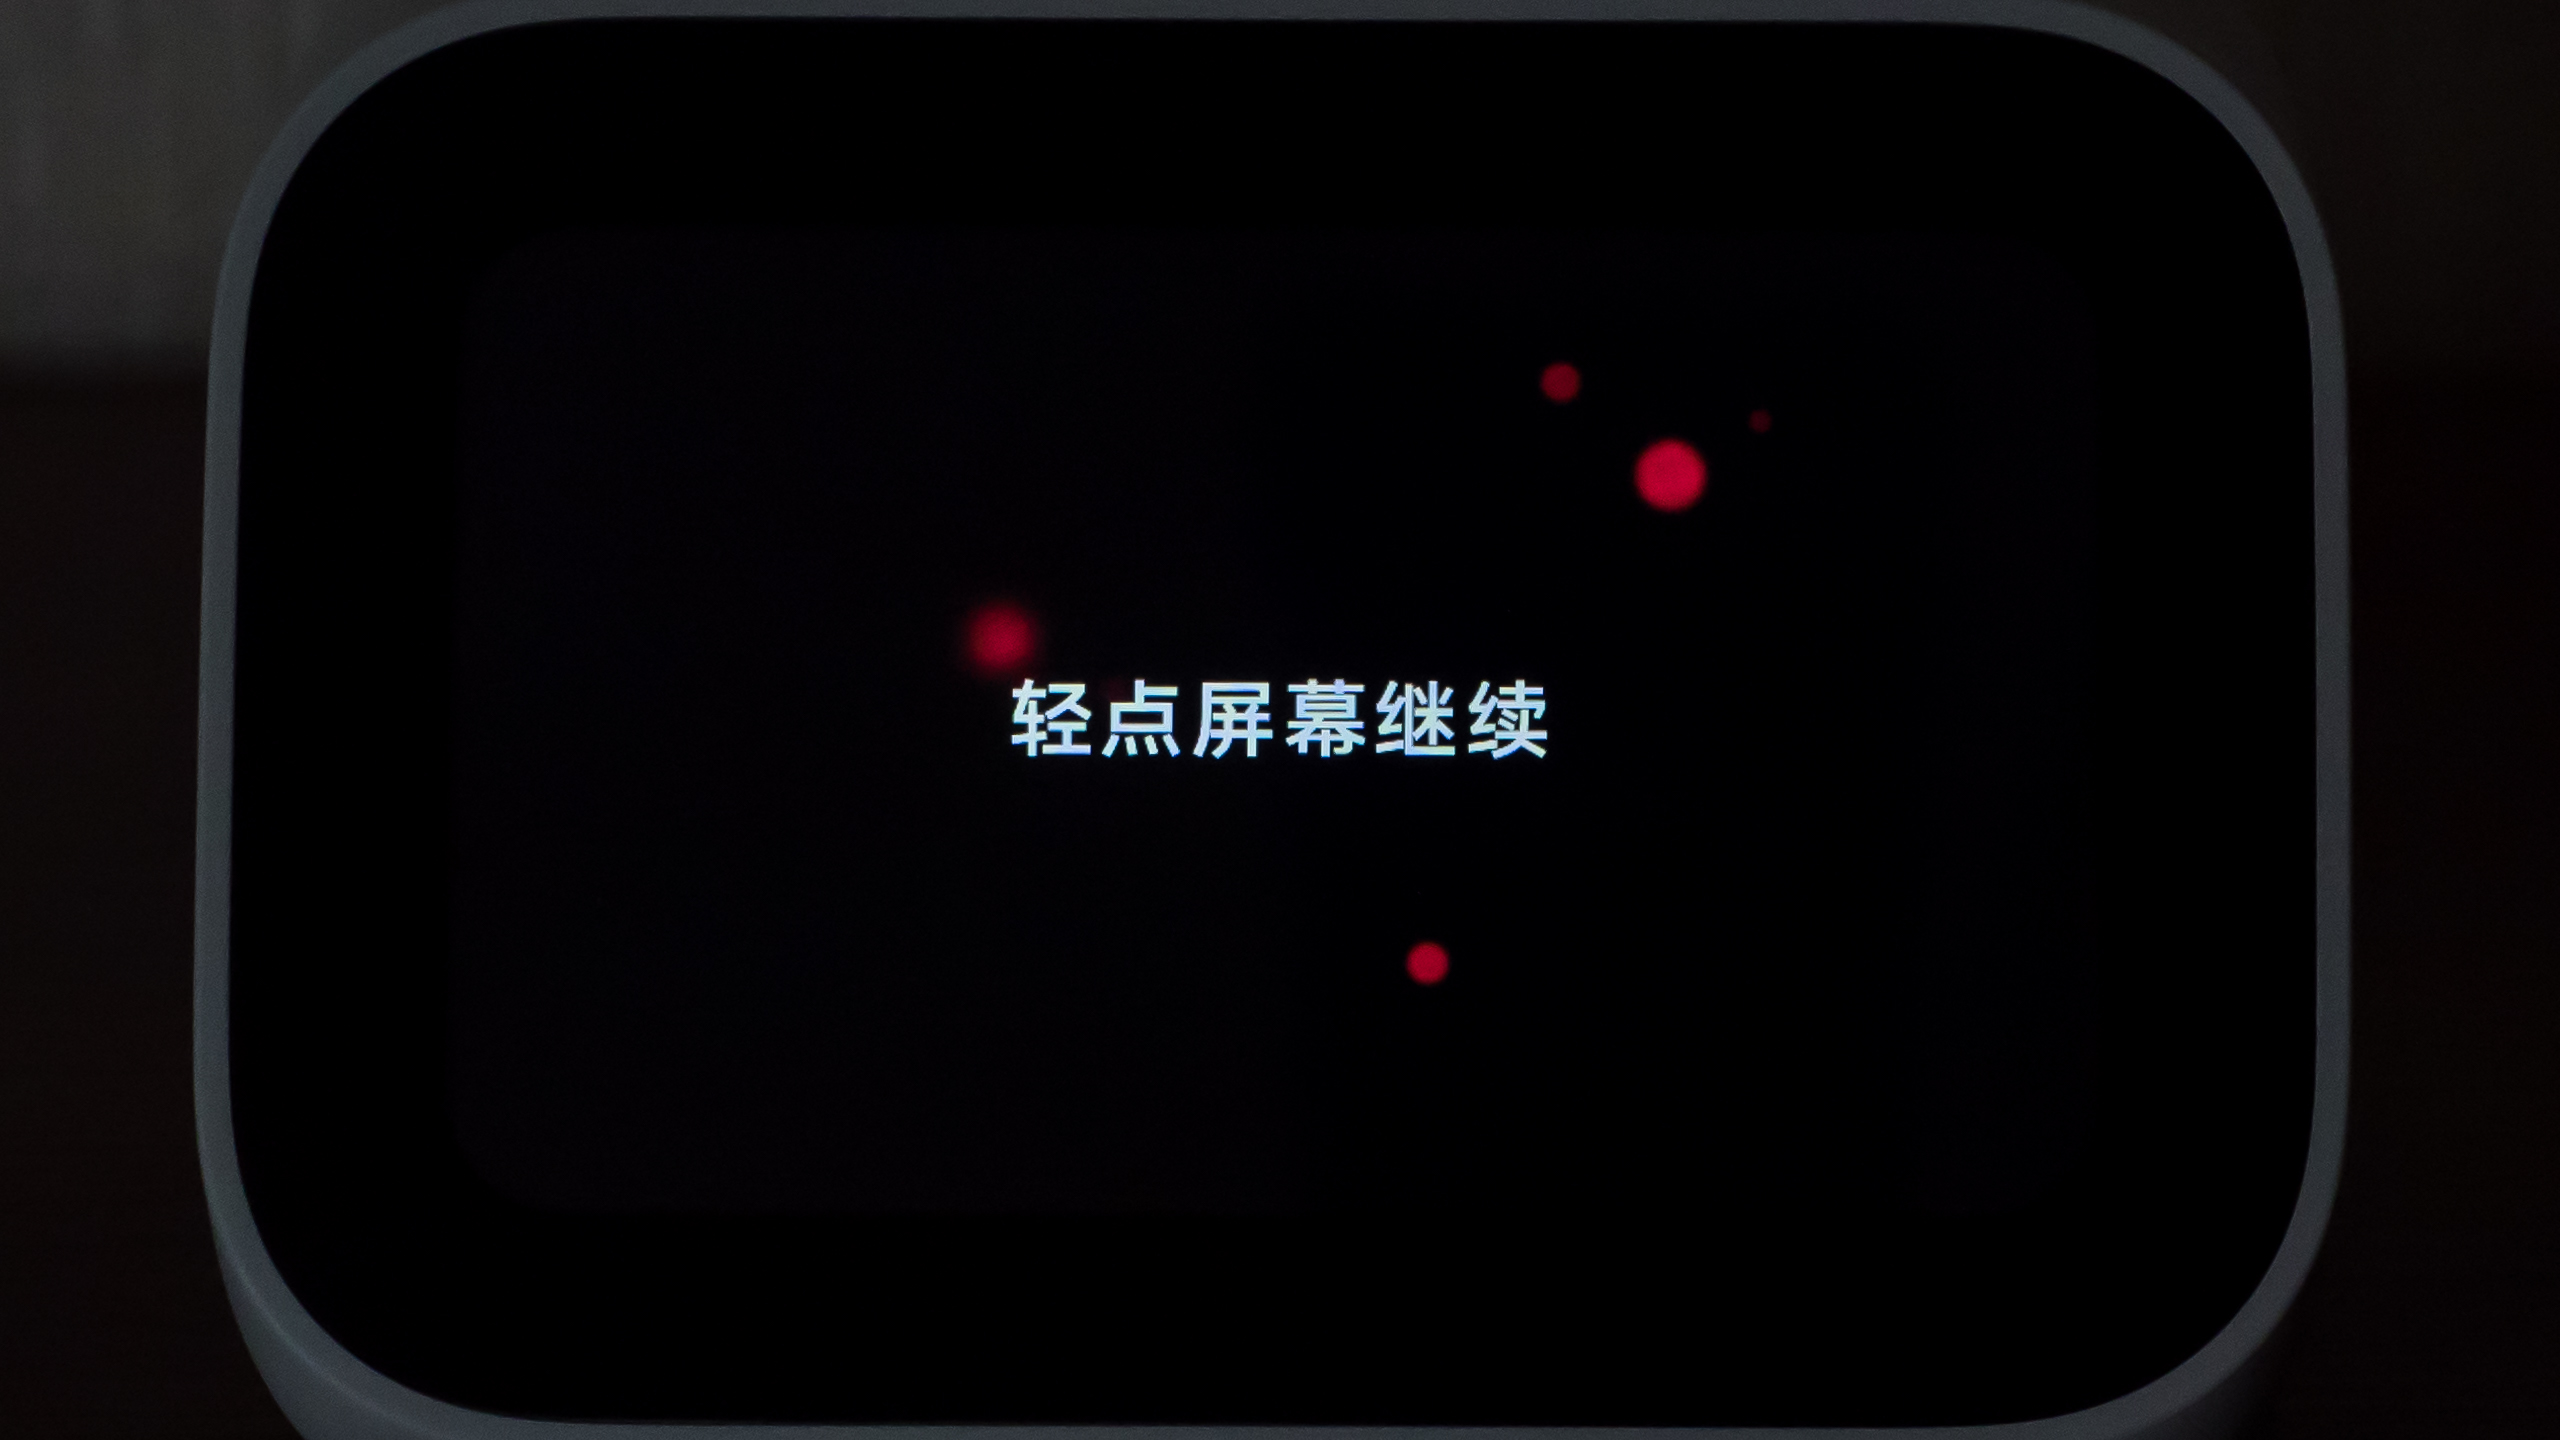 Xiaomi c nfc. Динамик Xiaomi с сенсорным экраном. Xiaomi mi Xiao ai Touch Screen Speaker. Xiaomi Xiaobai Touch Screen Speaker. Xiaomi mi Xiao ai Touch Screen Speaker lx04.